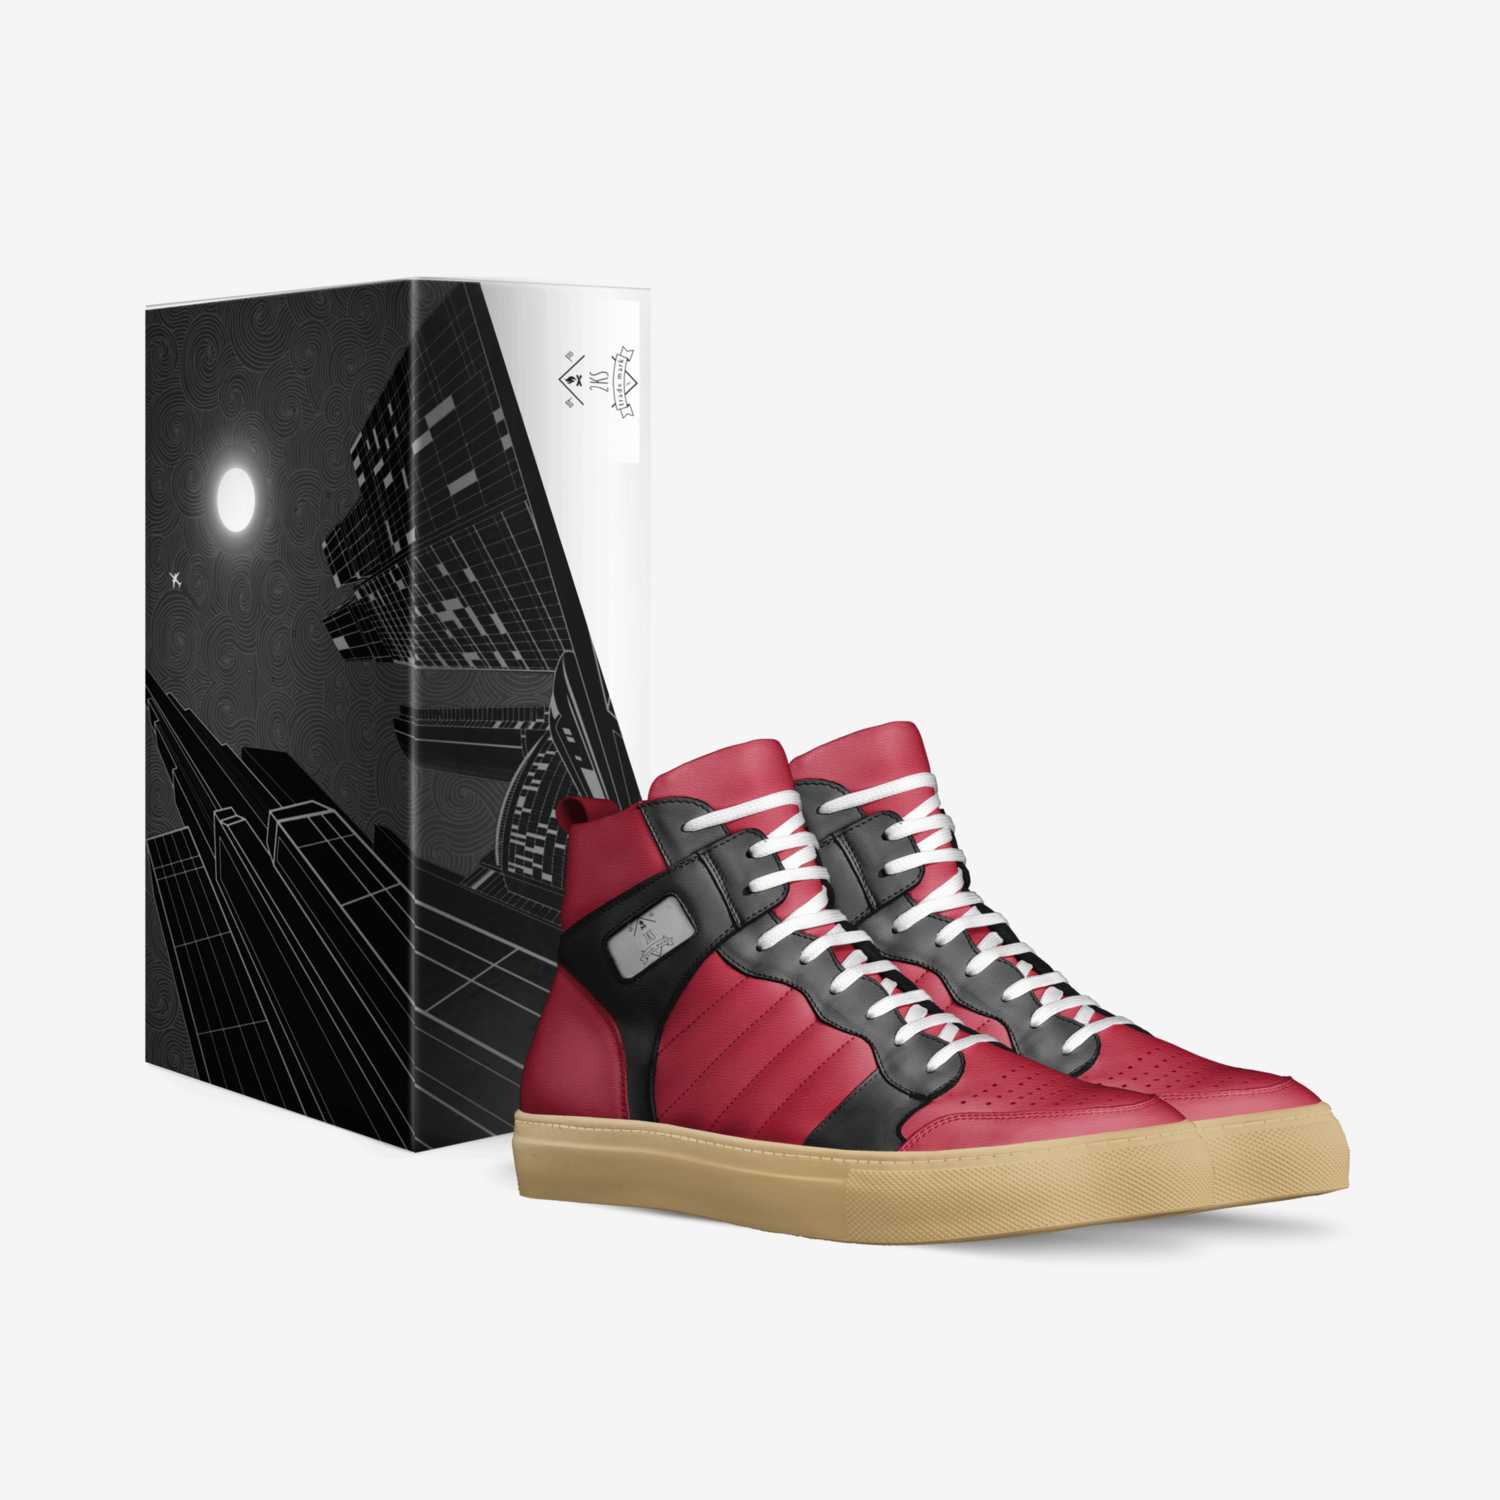 2ks custom made in Italy shoes by Toyin | Box view